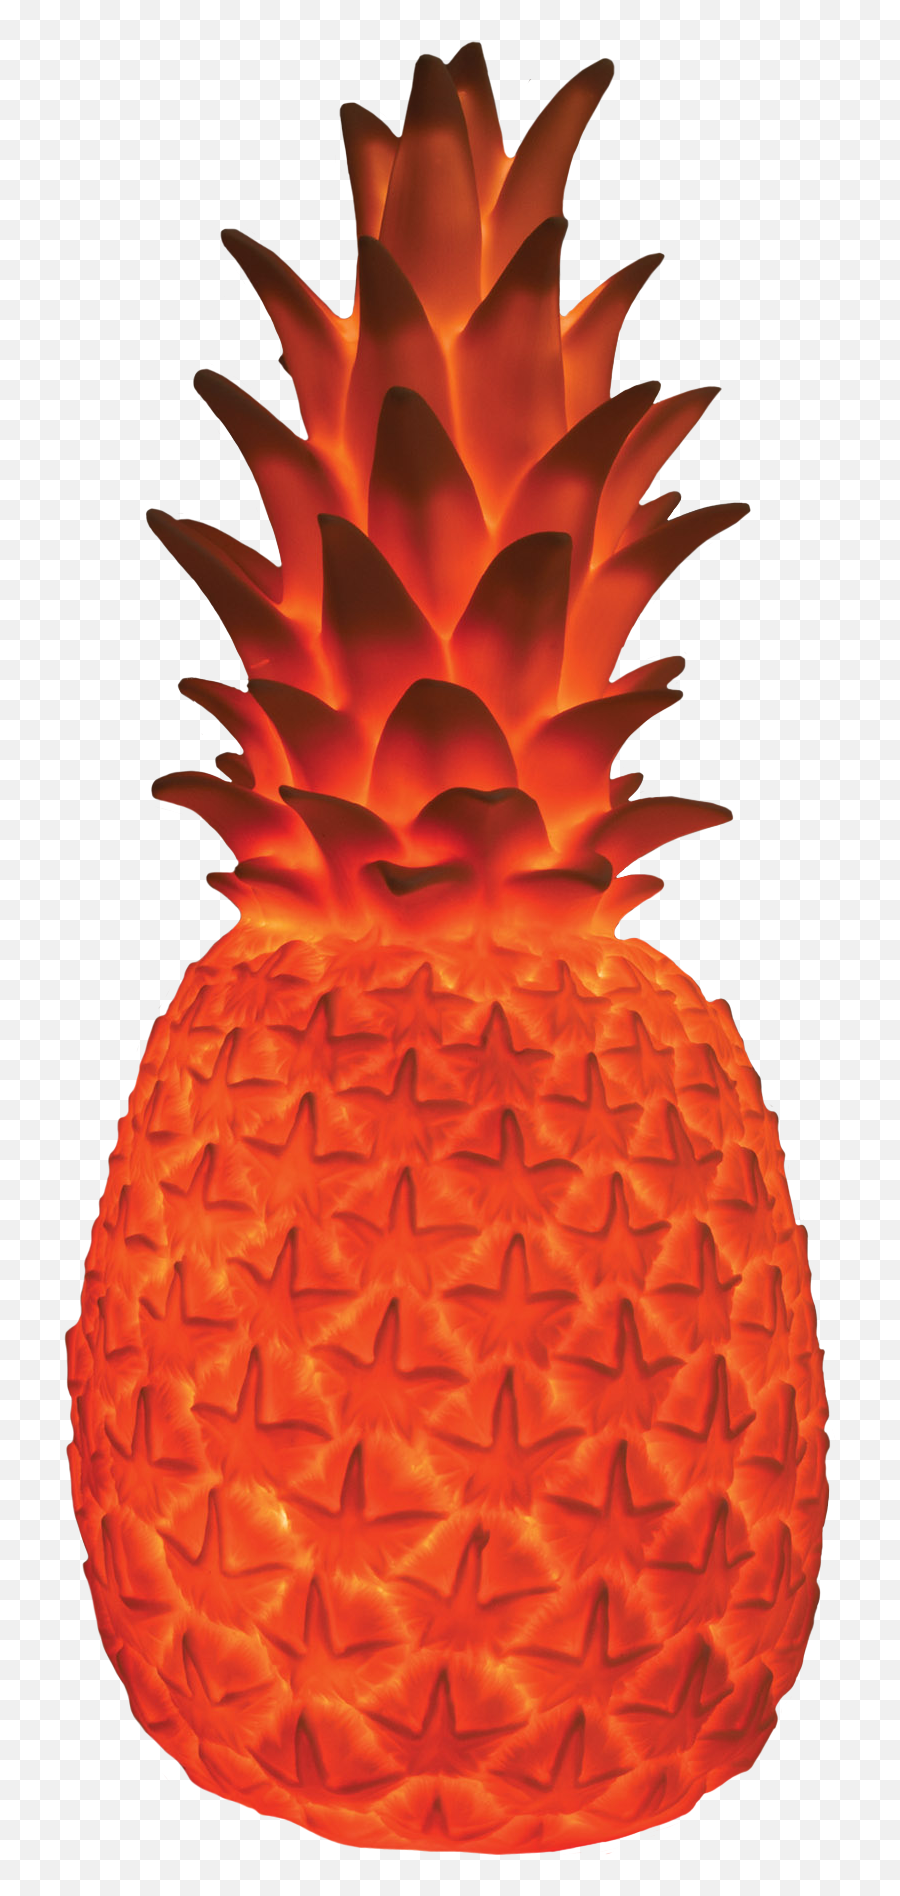 Goodnight - Pineapple Pineapple Transparent Cartoon Red Pineapple Png,Pineapple Transparent